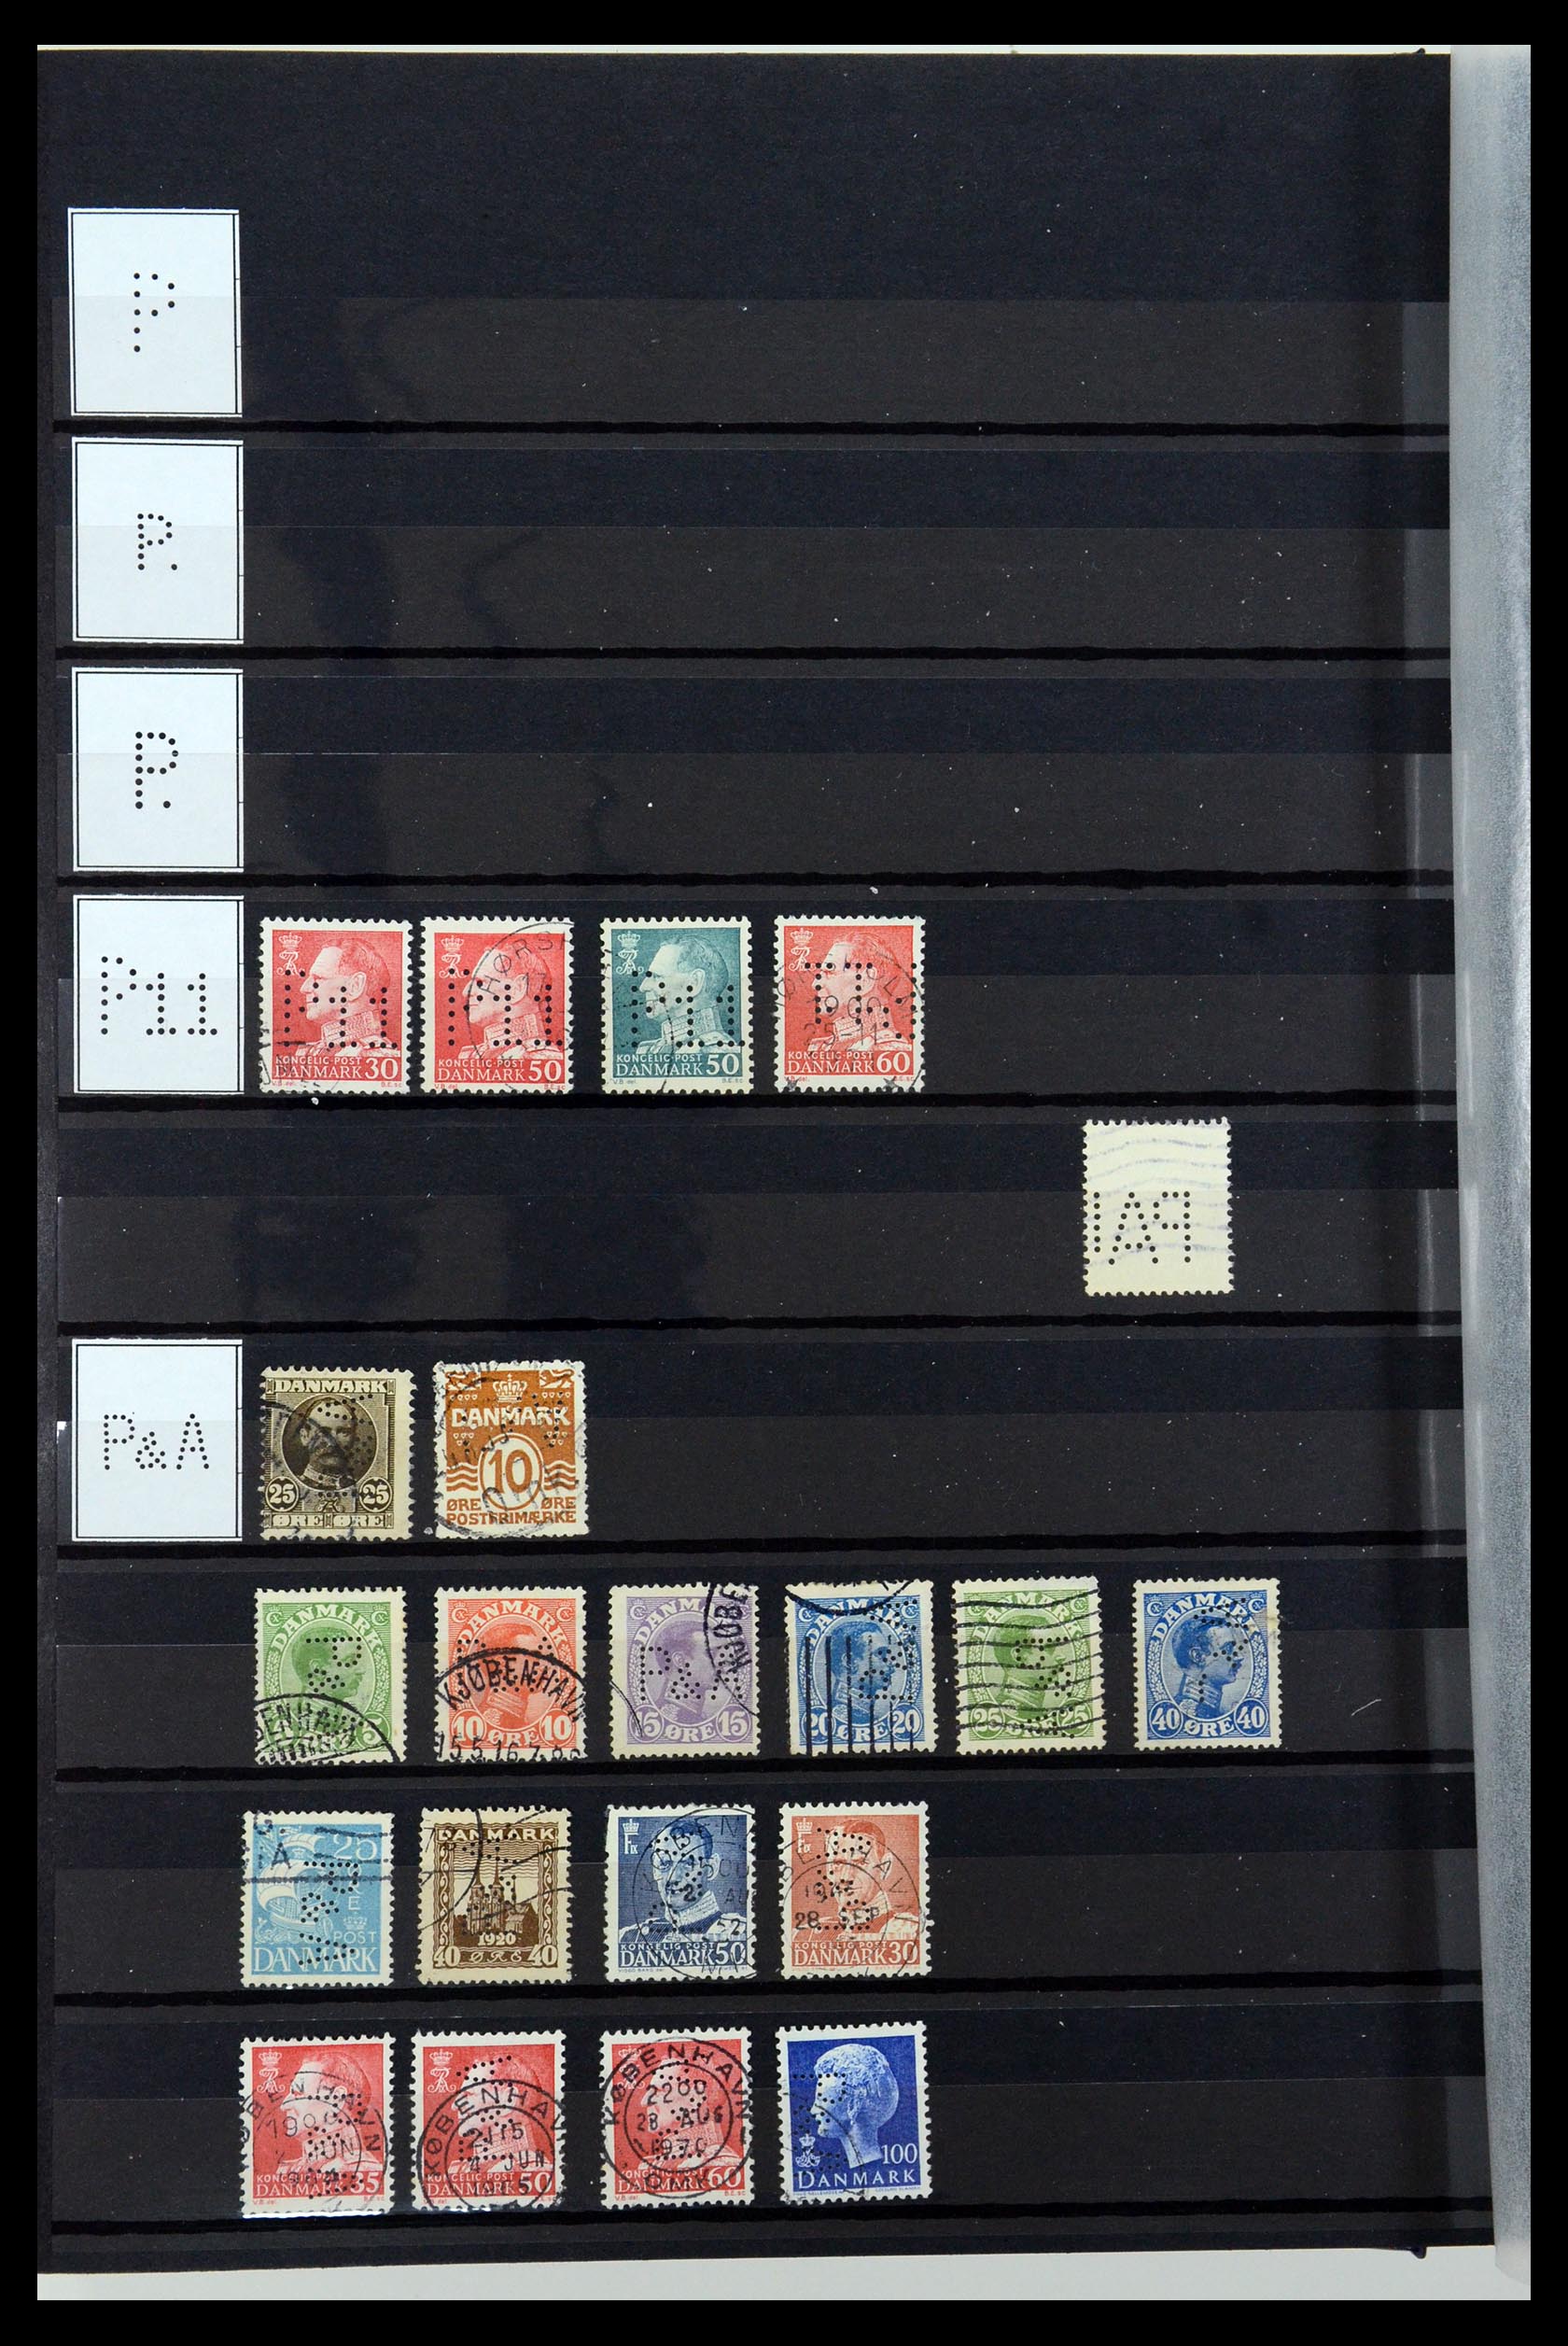 36396 189 - Stamp collection 36396 Denmark perfins.